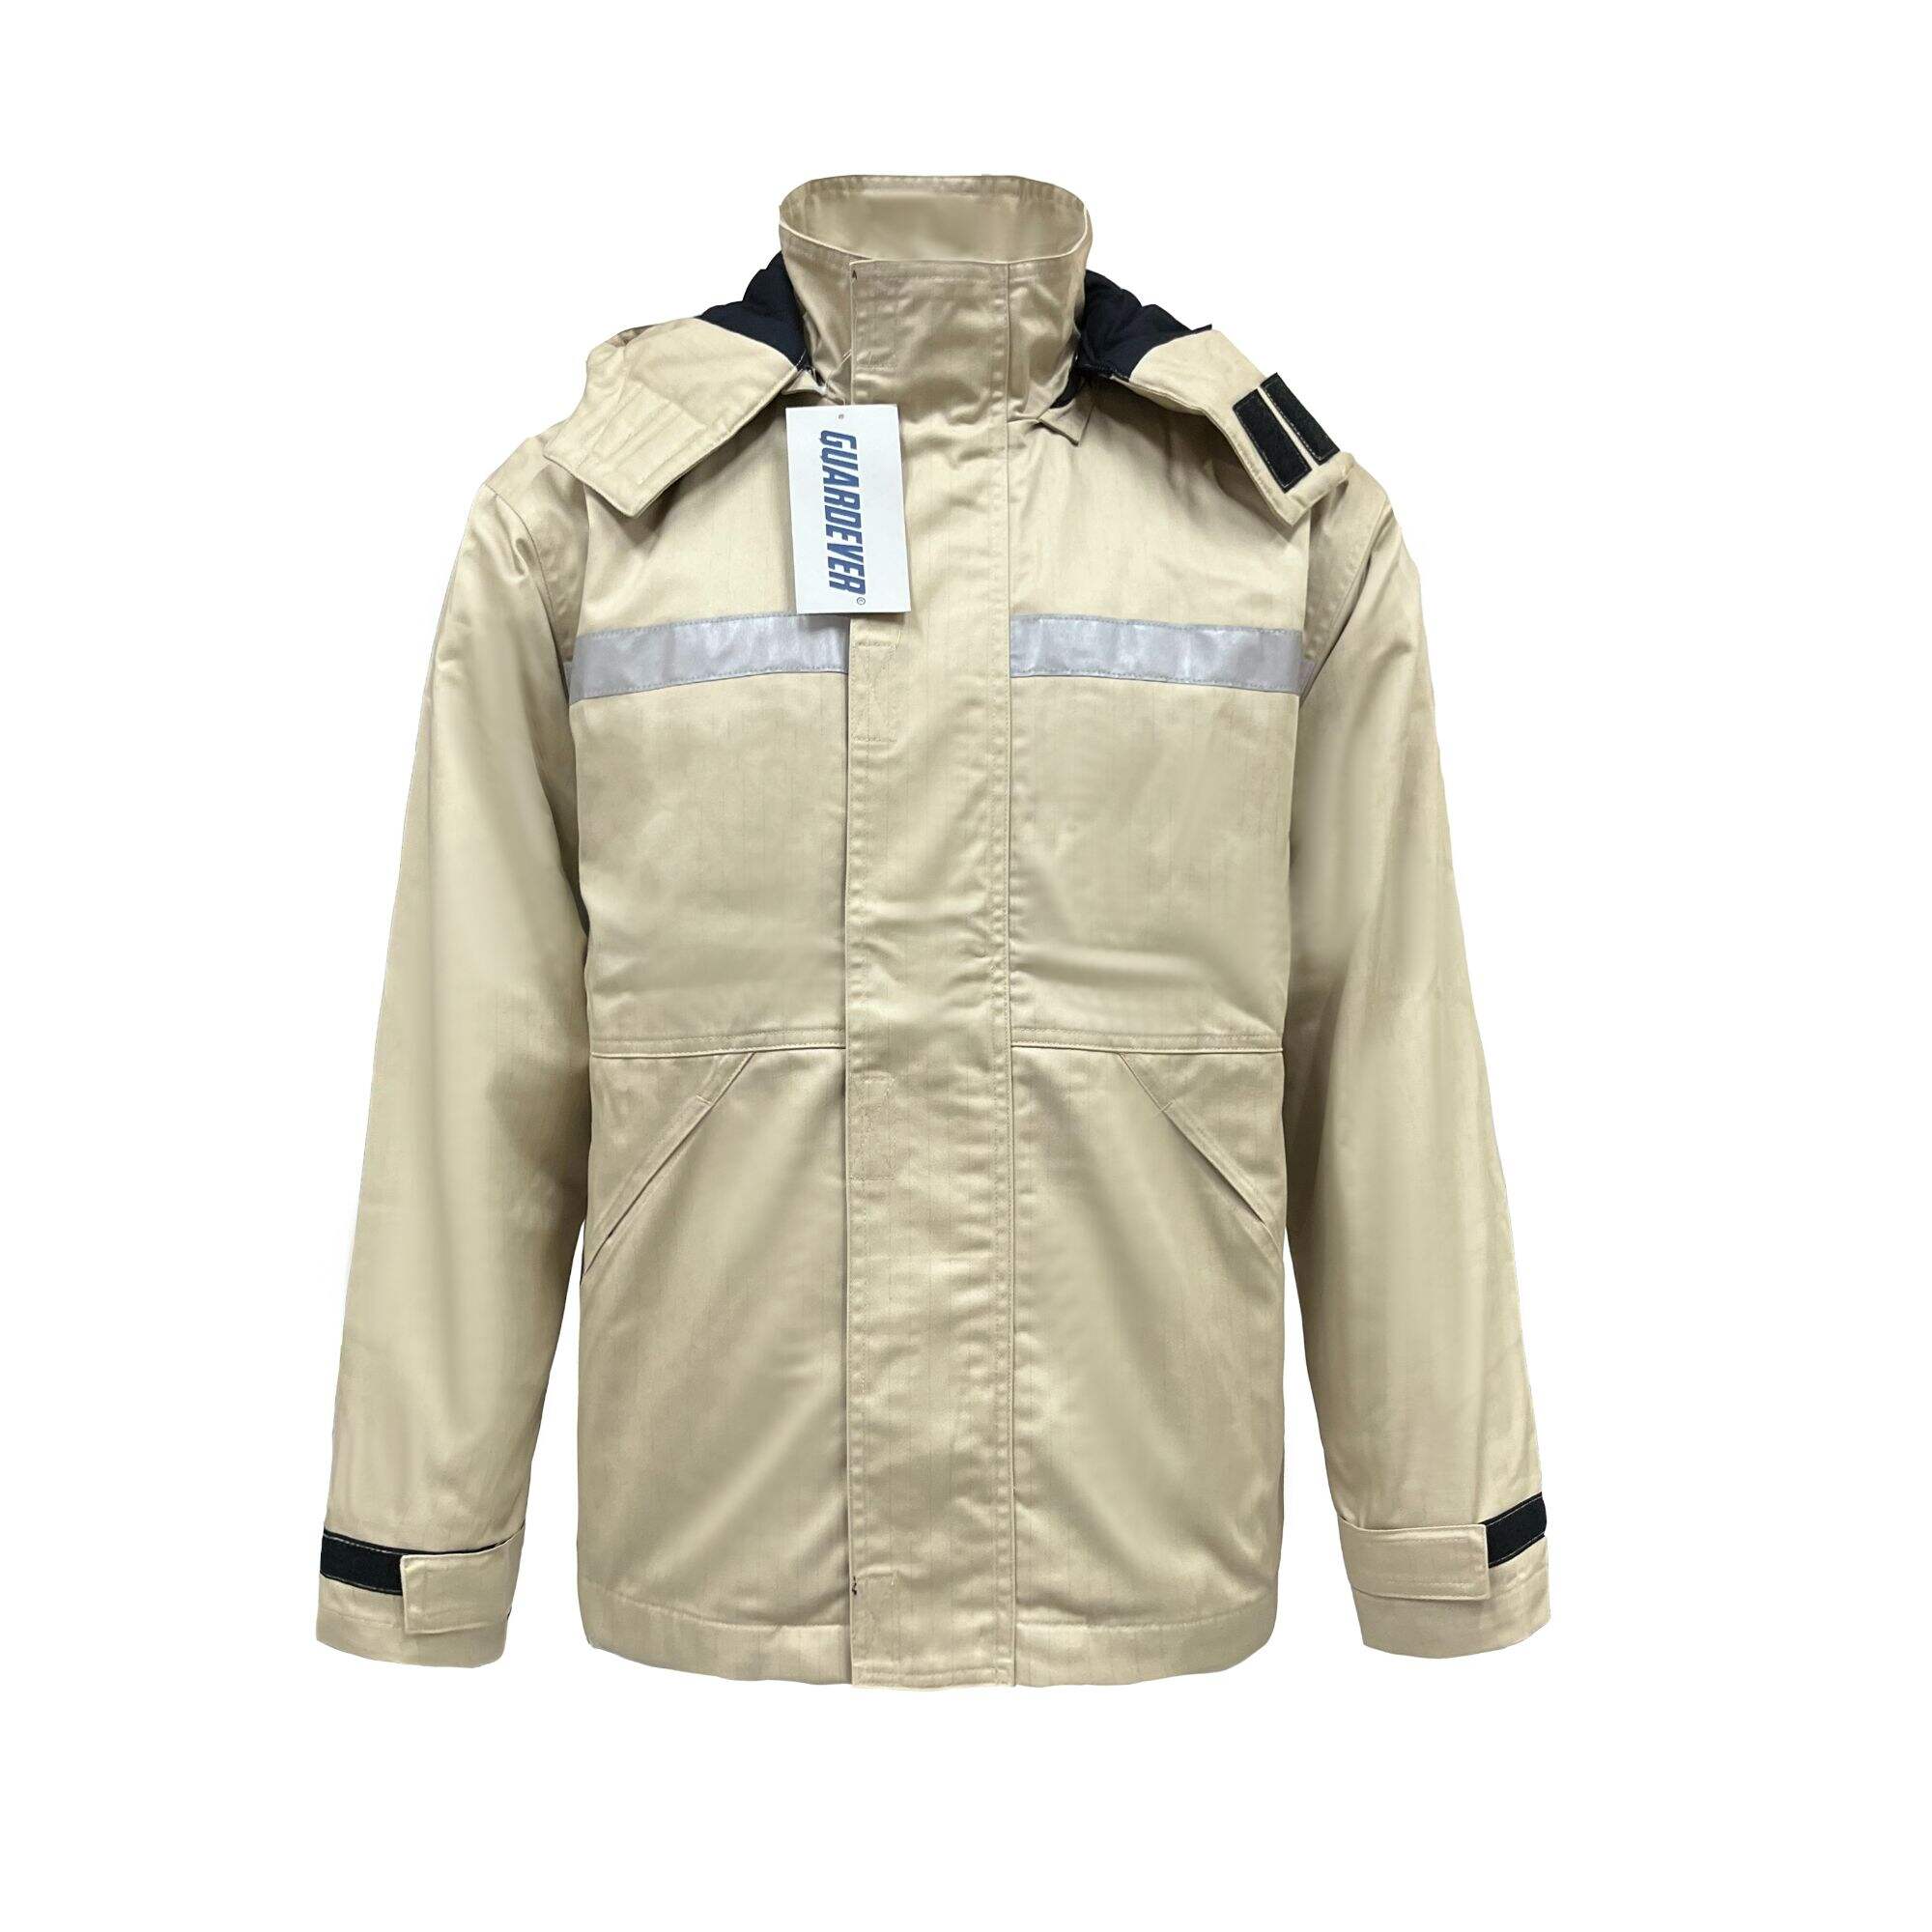 Industrial Premium Thermal Waterproof Clothes Construction Outdoor Reflective Crew Neck Jacket  